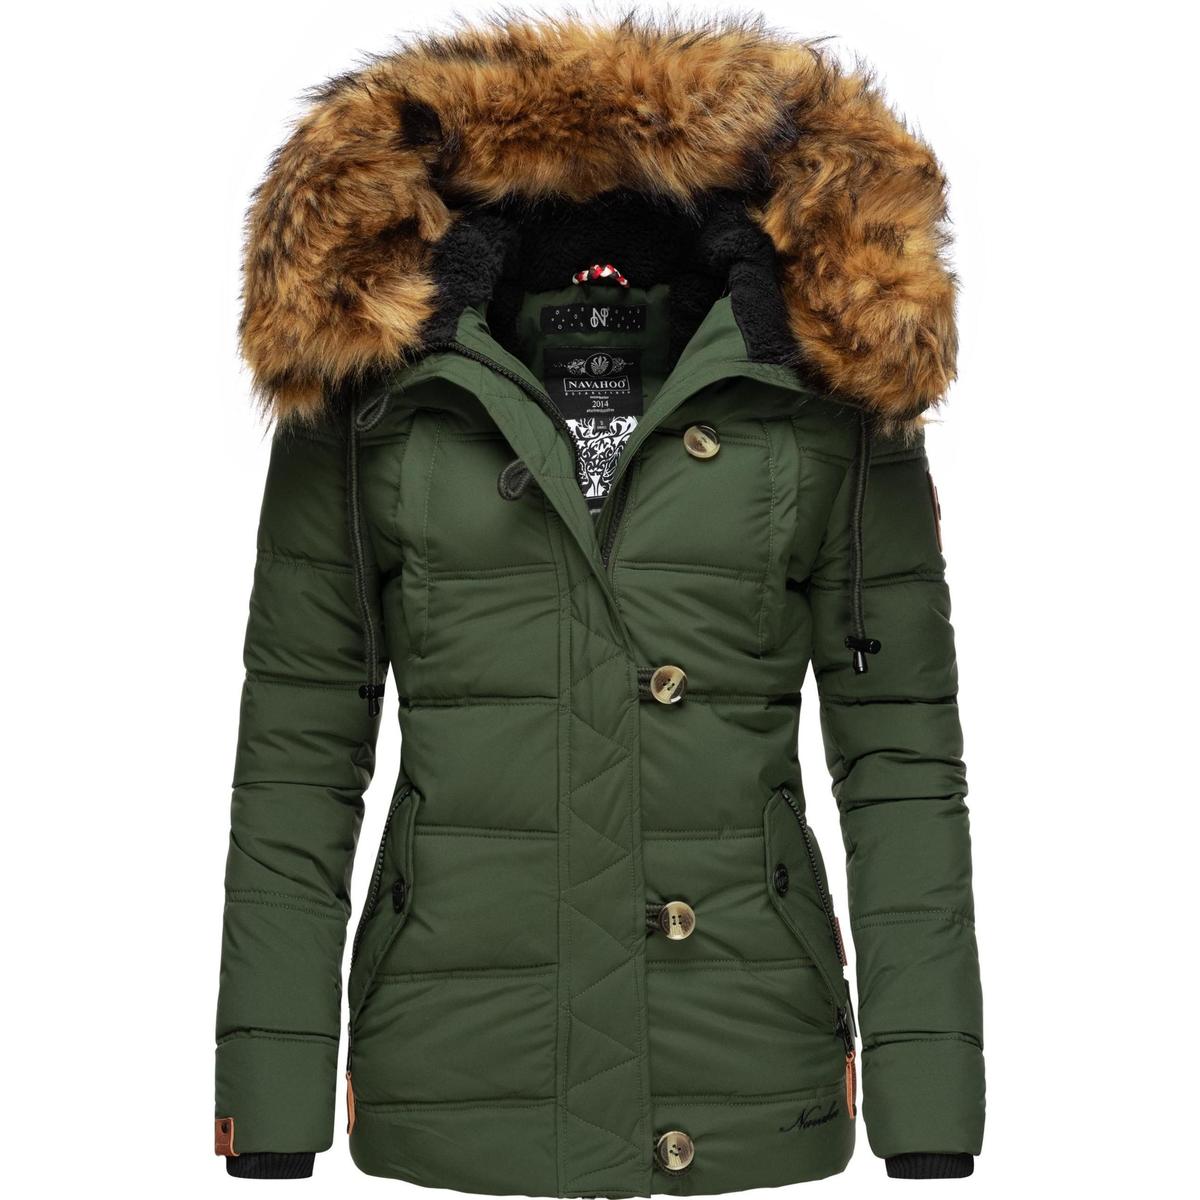 Navahoo Winterjacke - 109,95 Grün Zoja Kleidung Jacken € Damen